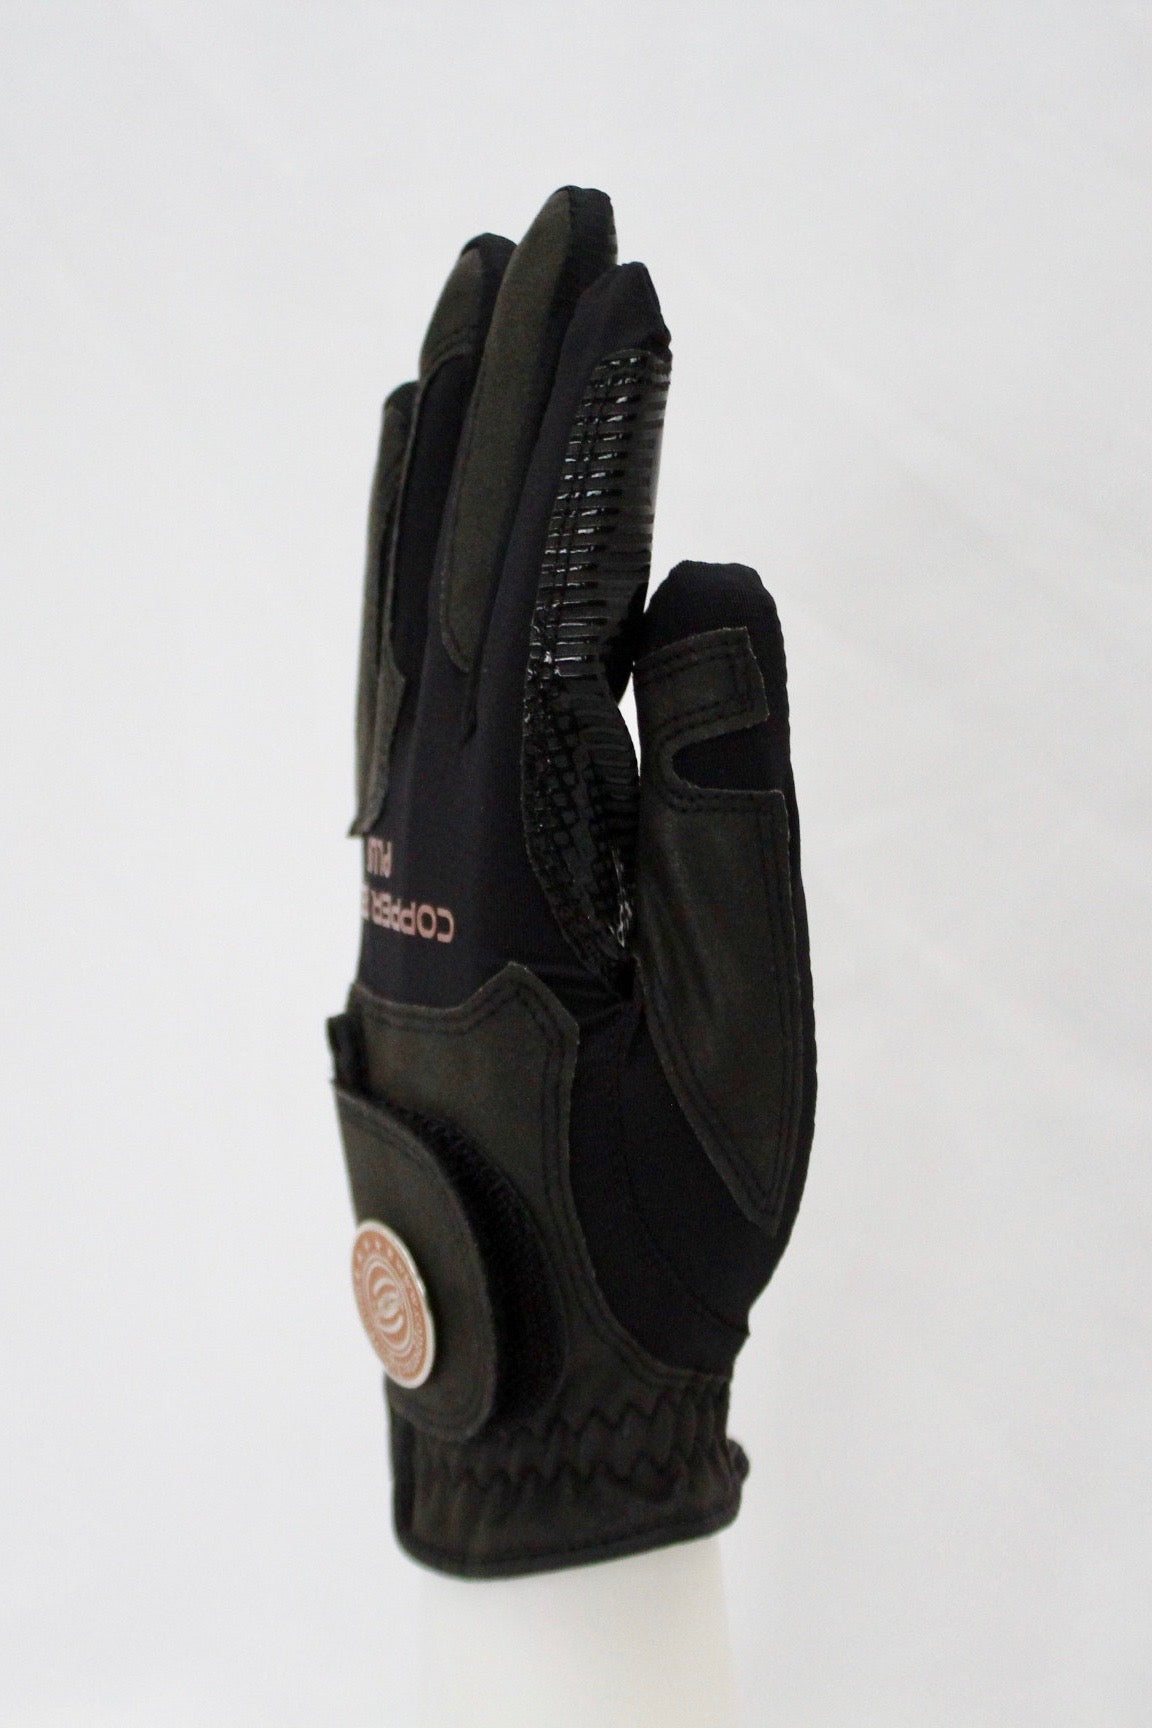 Copper Infused Golf Glove Black/Black